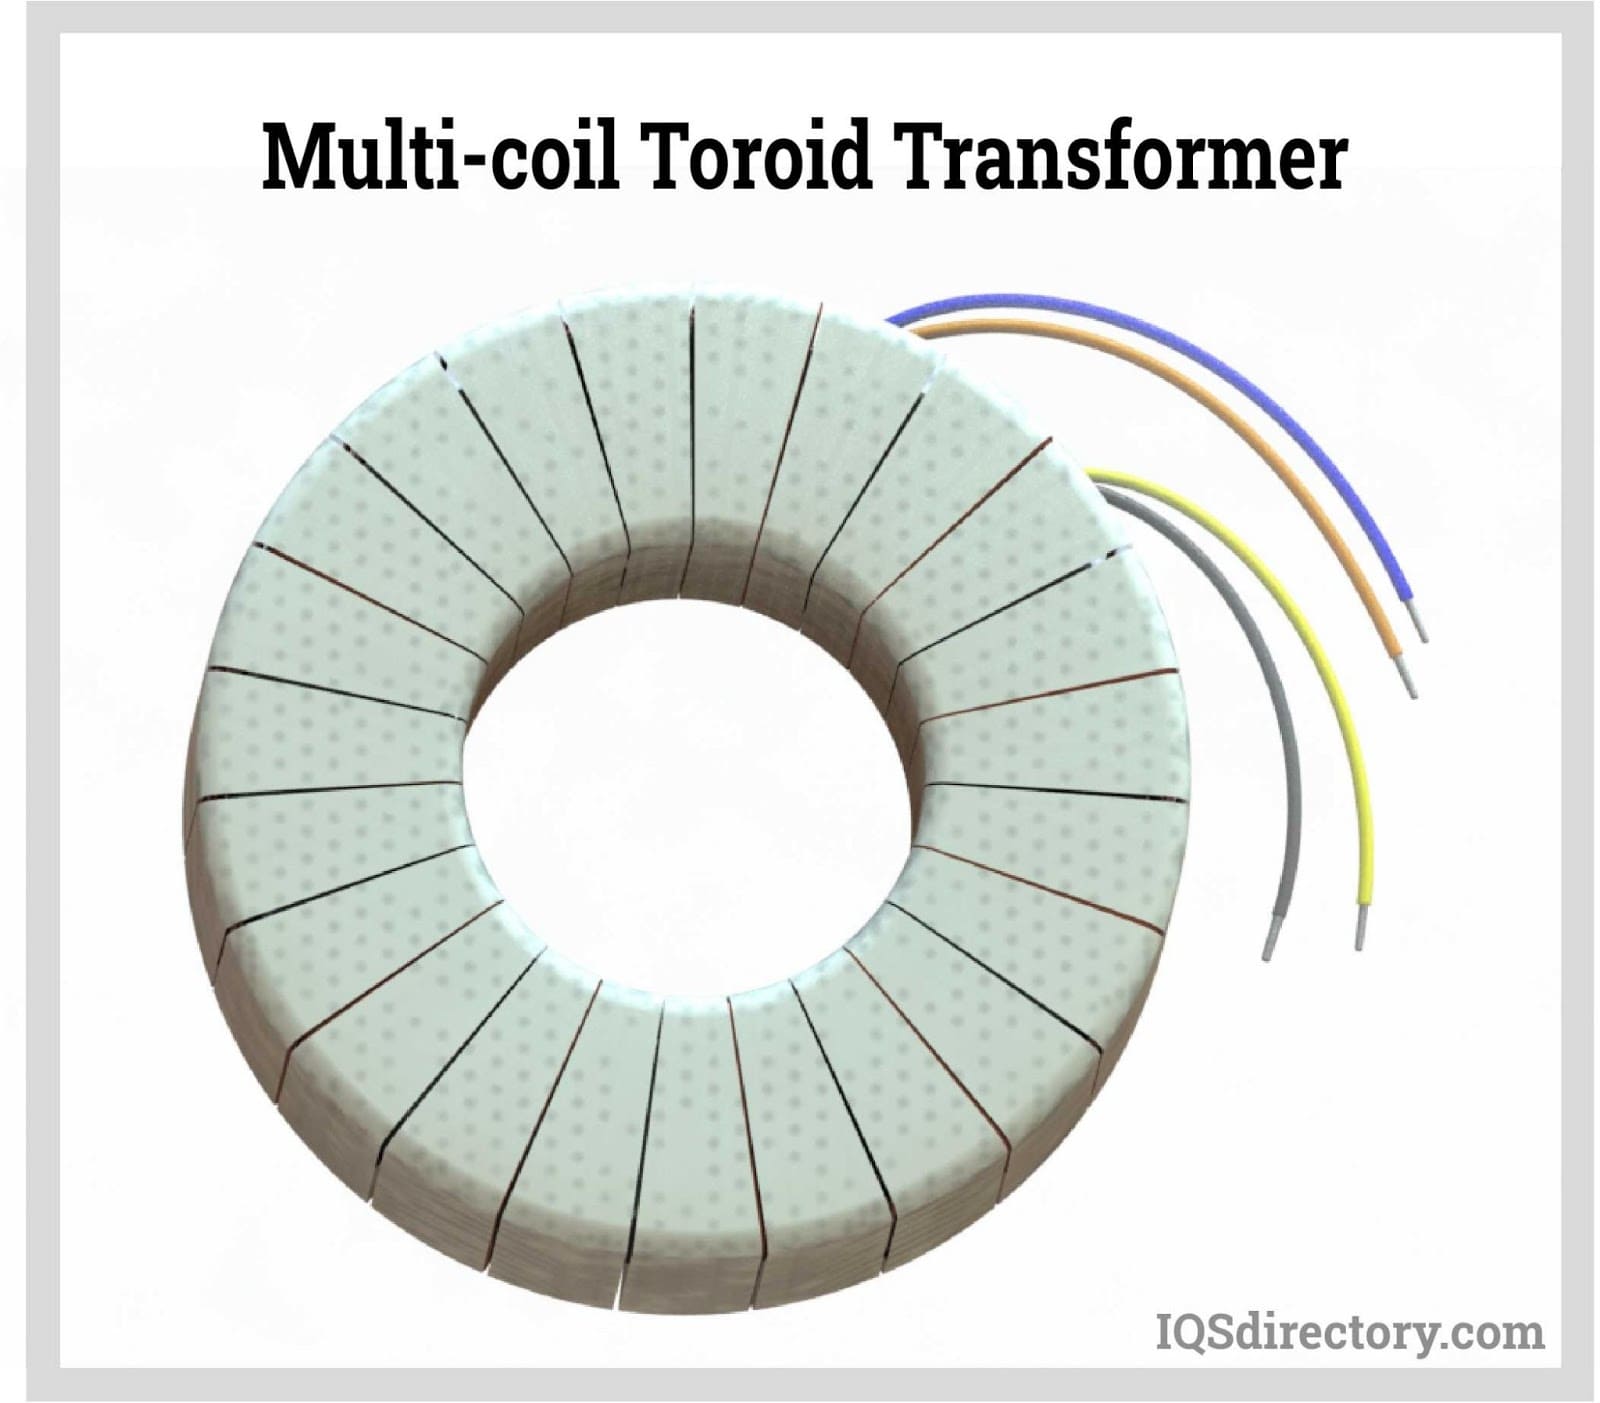 Multi-coil Toroid Transformer